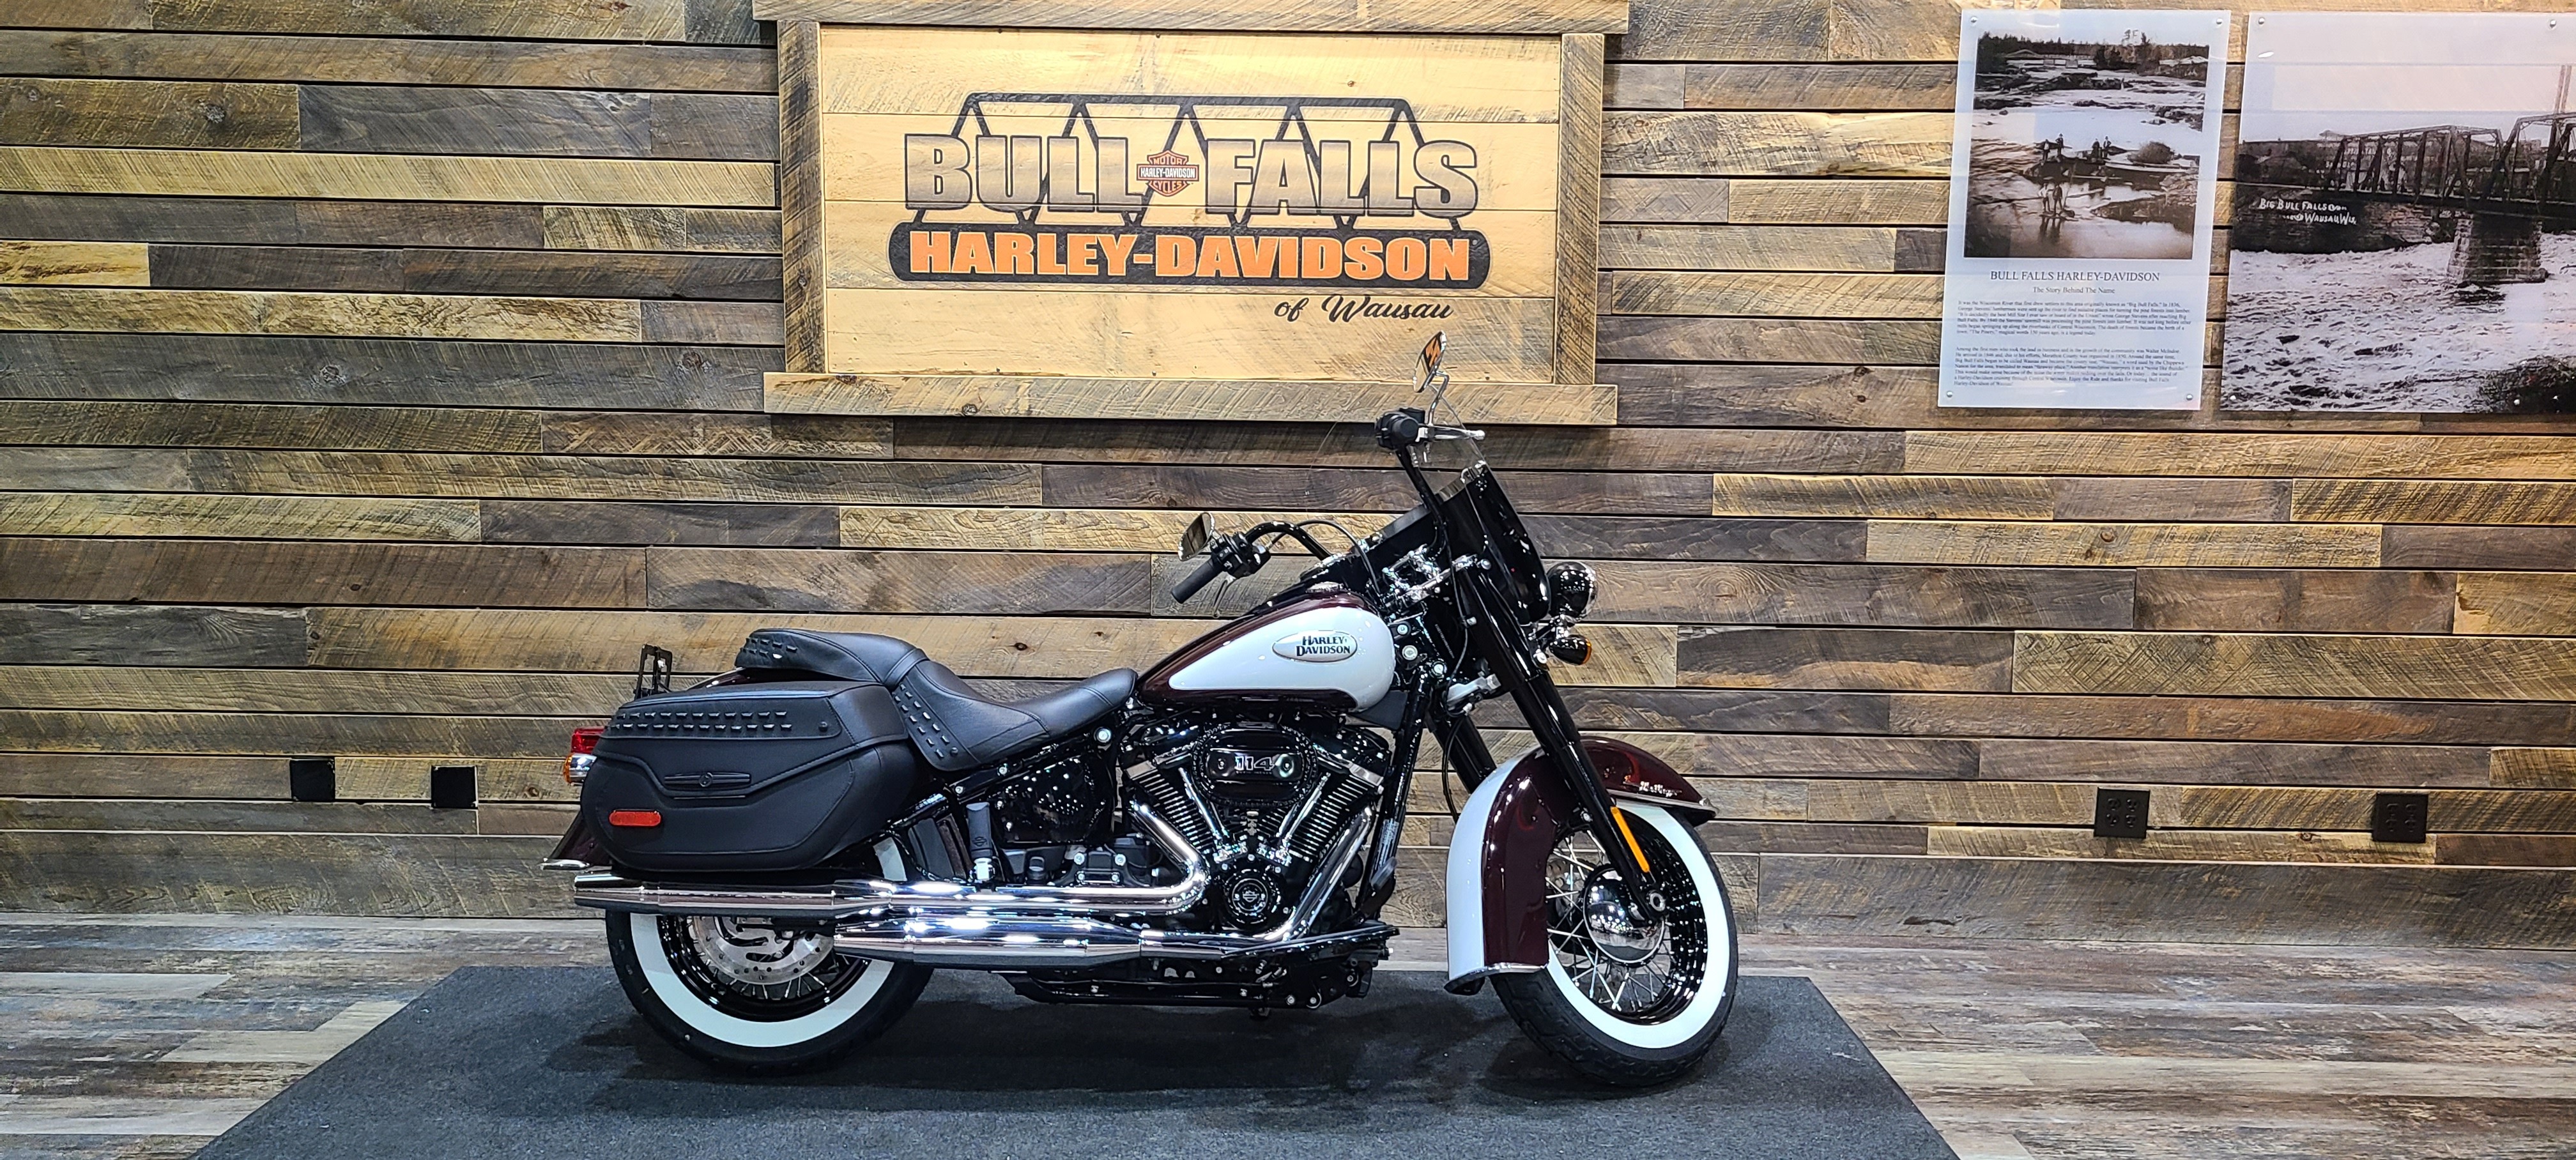 2021 Harley-Davidson Cruiser Heritage Classic S at Bull Falls Harley-Davidson